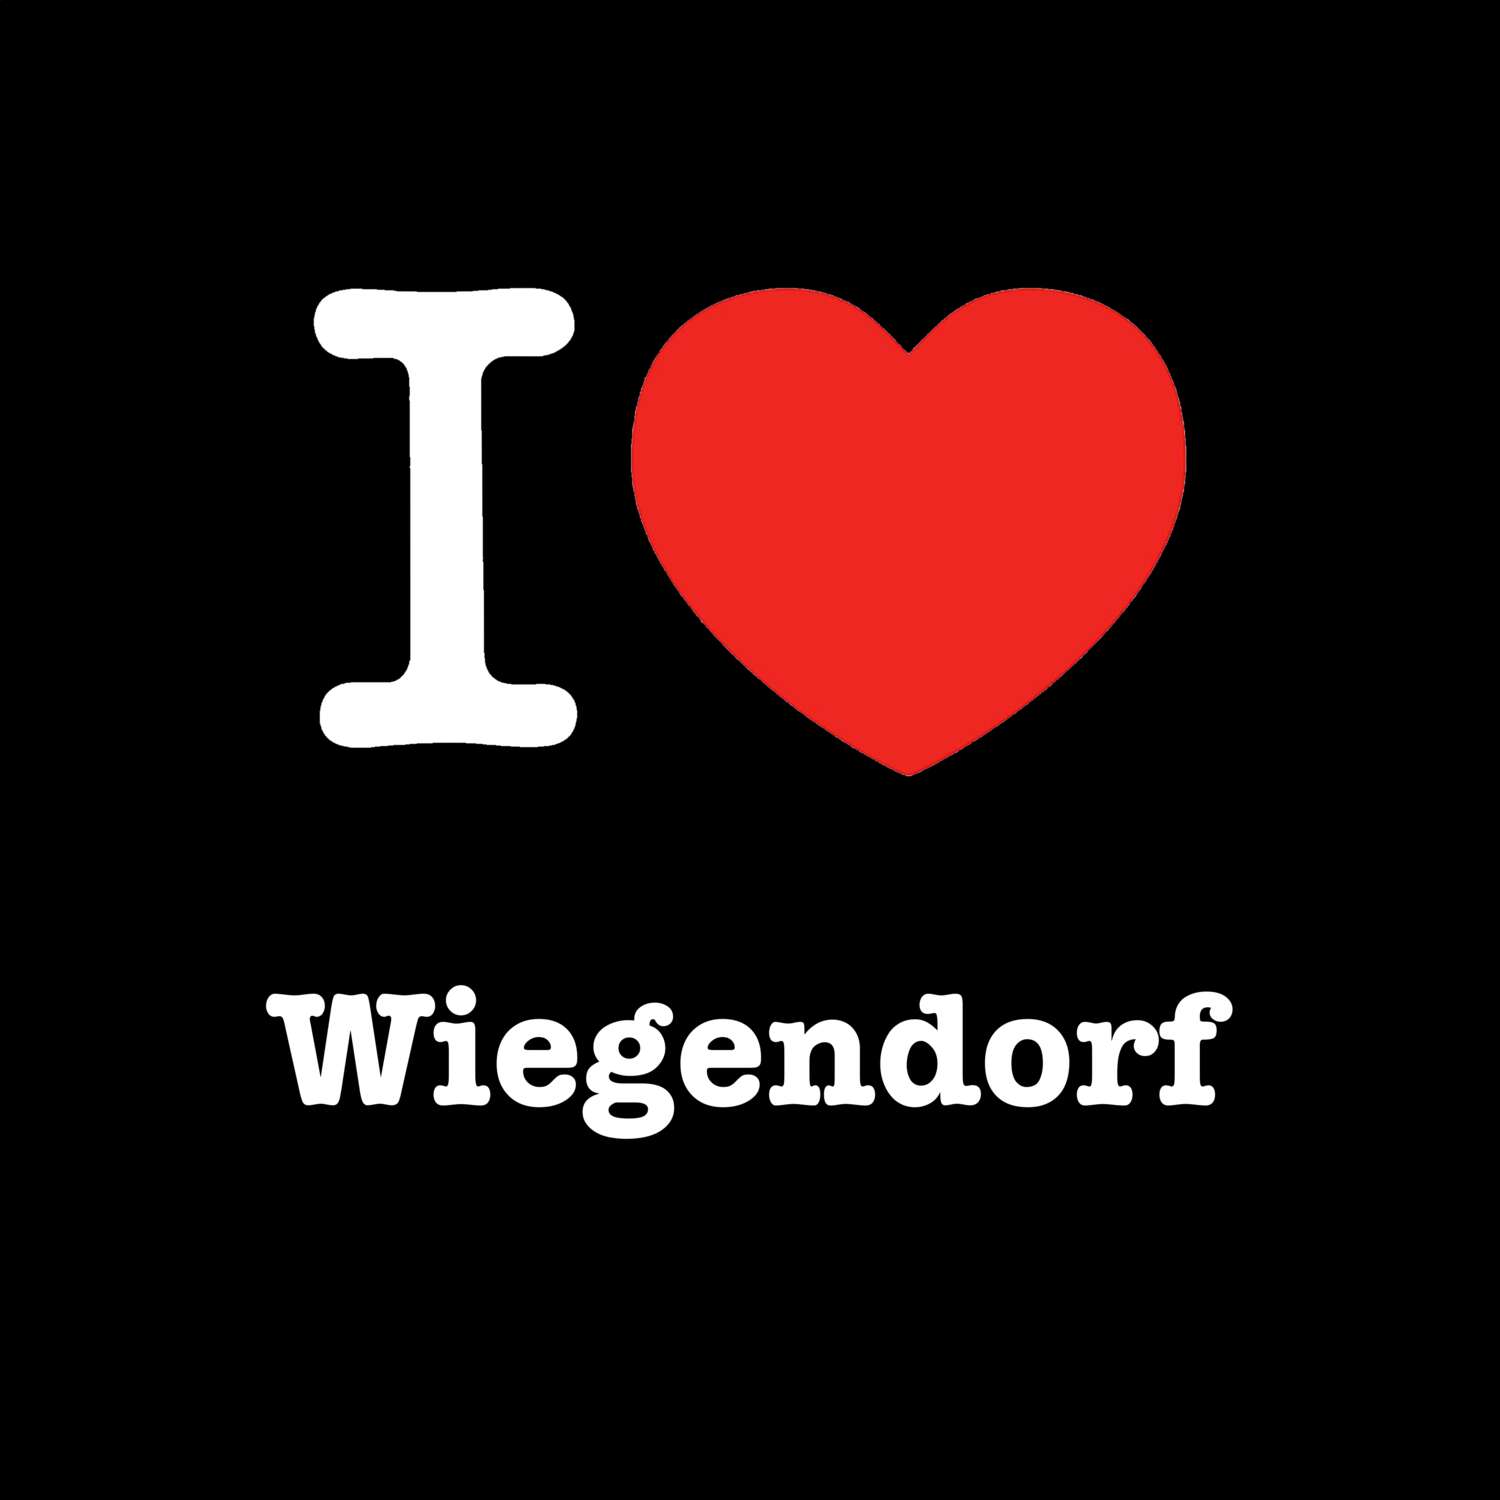 Wiegendorf T-Shirt »I love«